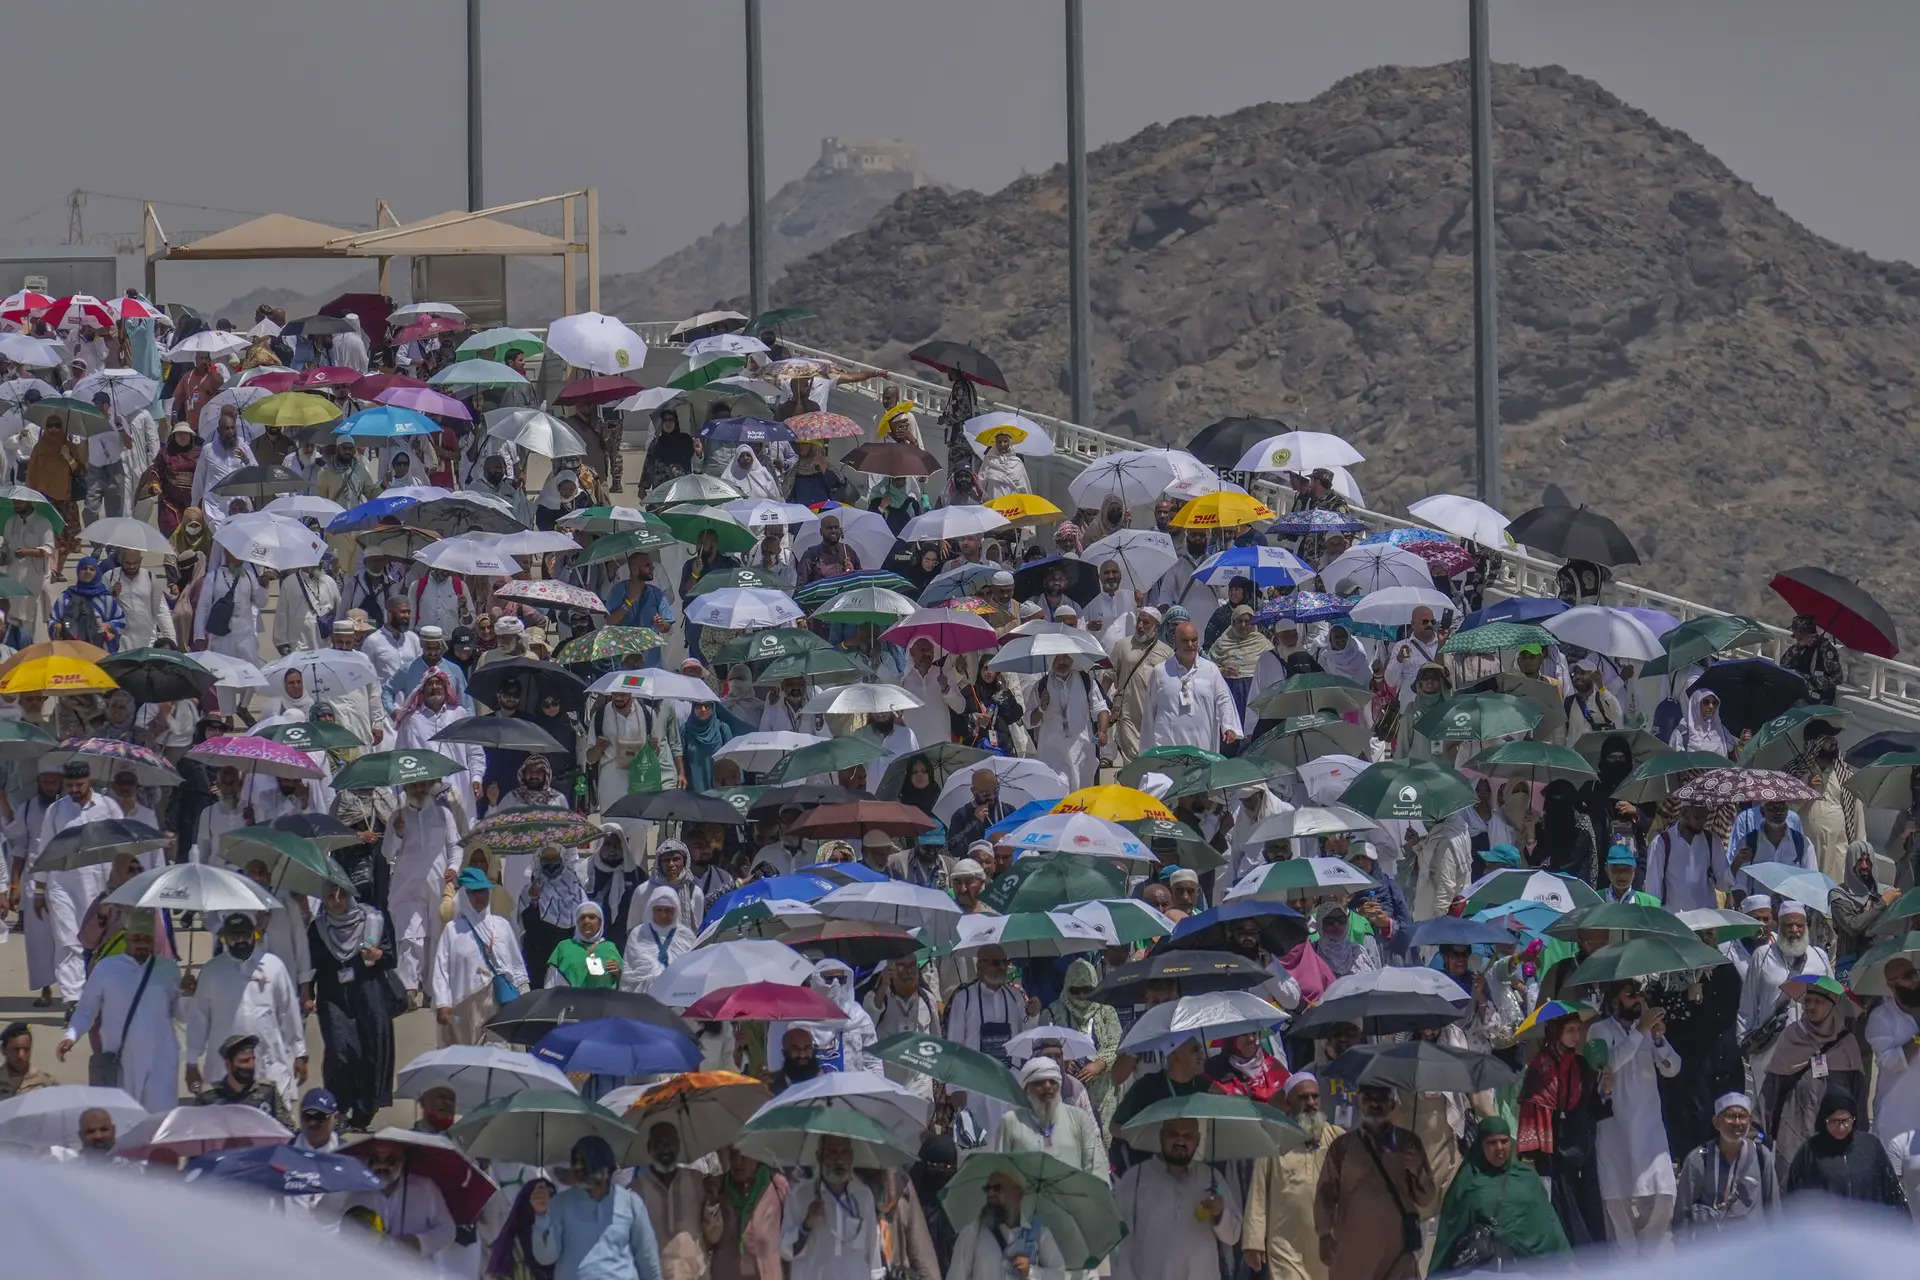 Soaring temperatures scorch pilgrims on Haj in Saudi Arabia